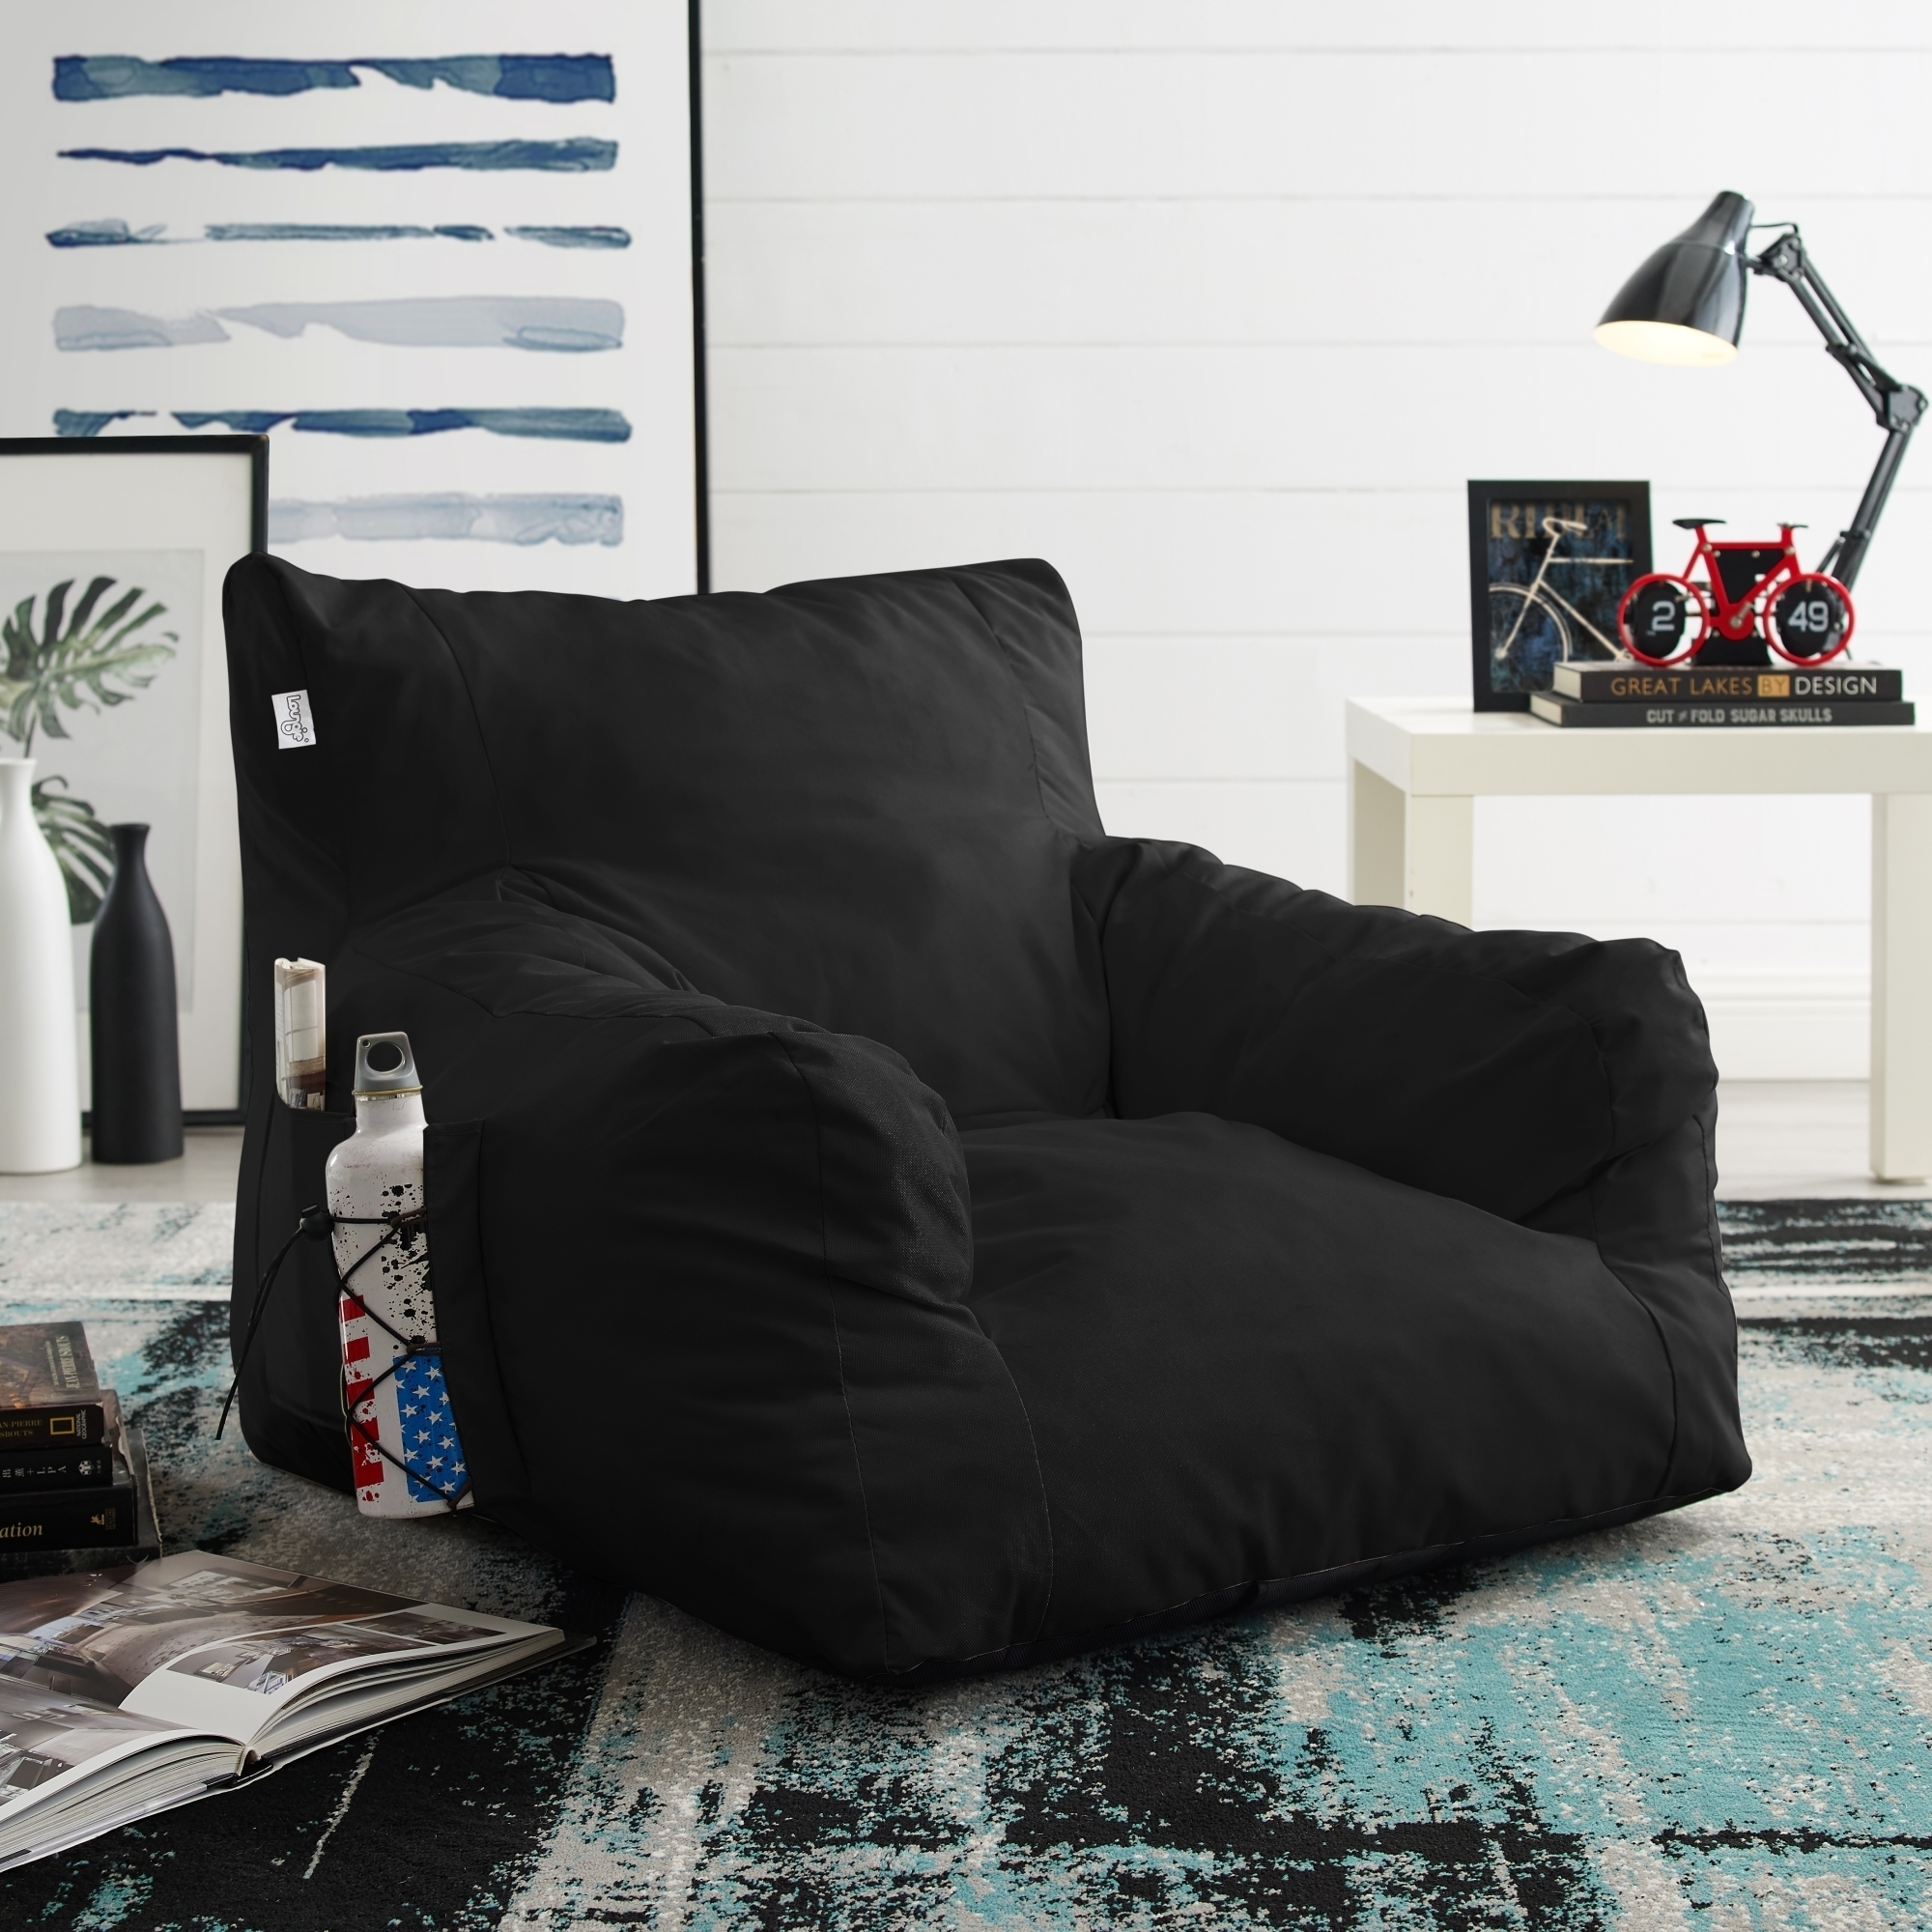 Loungie Comfy Foam Lounge Chair-Nylon Bean Bag-Indoor- Outdoor-Self Expanding-Water Resistant - Black